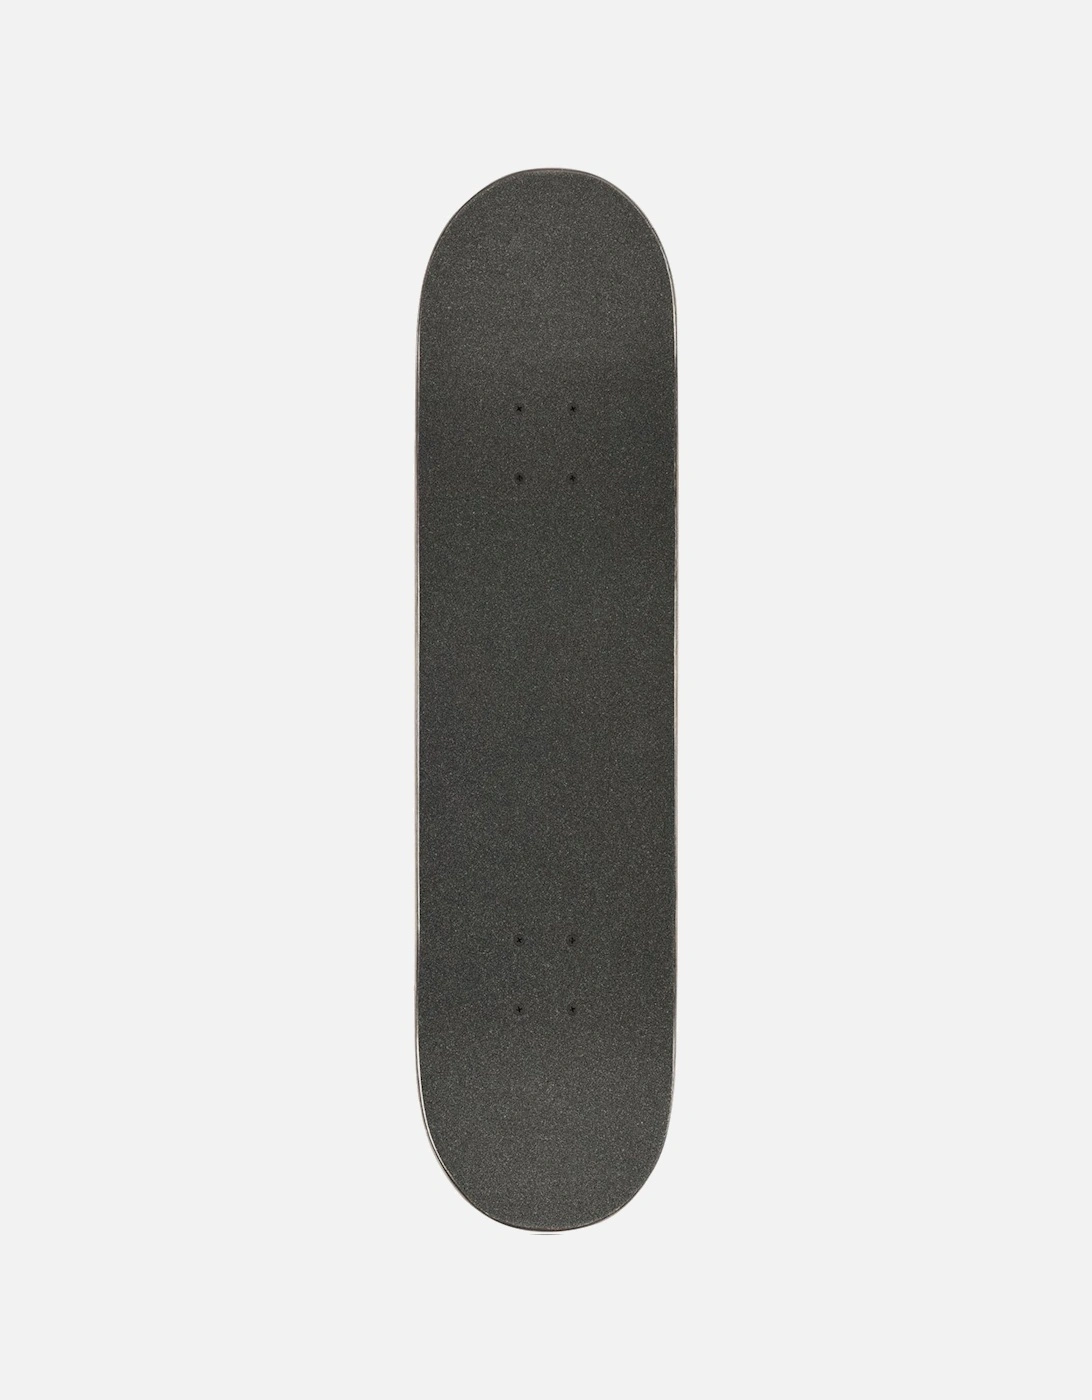 Goodstock Complete Skateboard - 7.875"